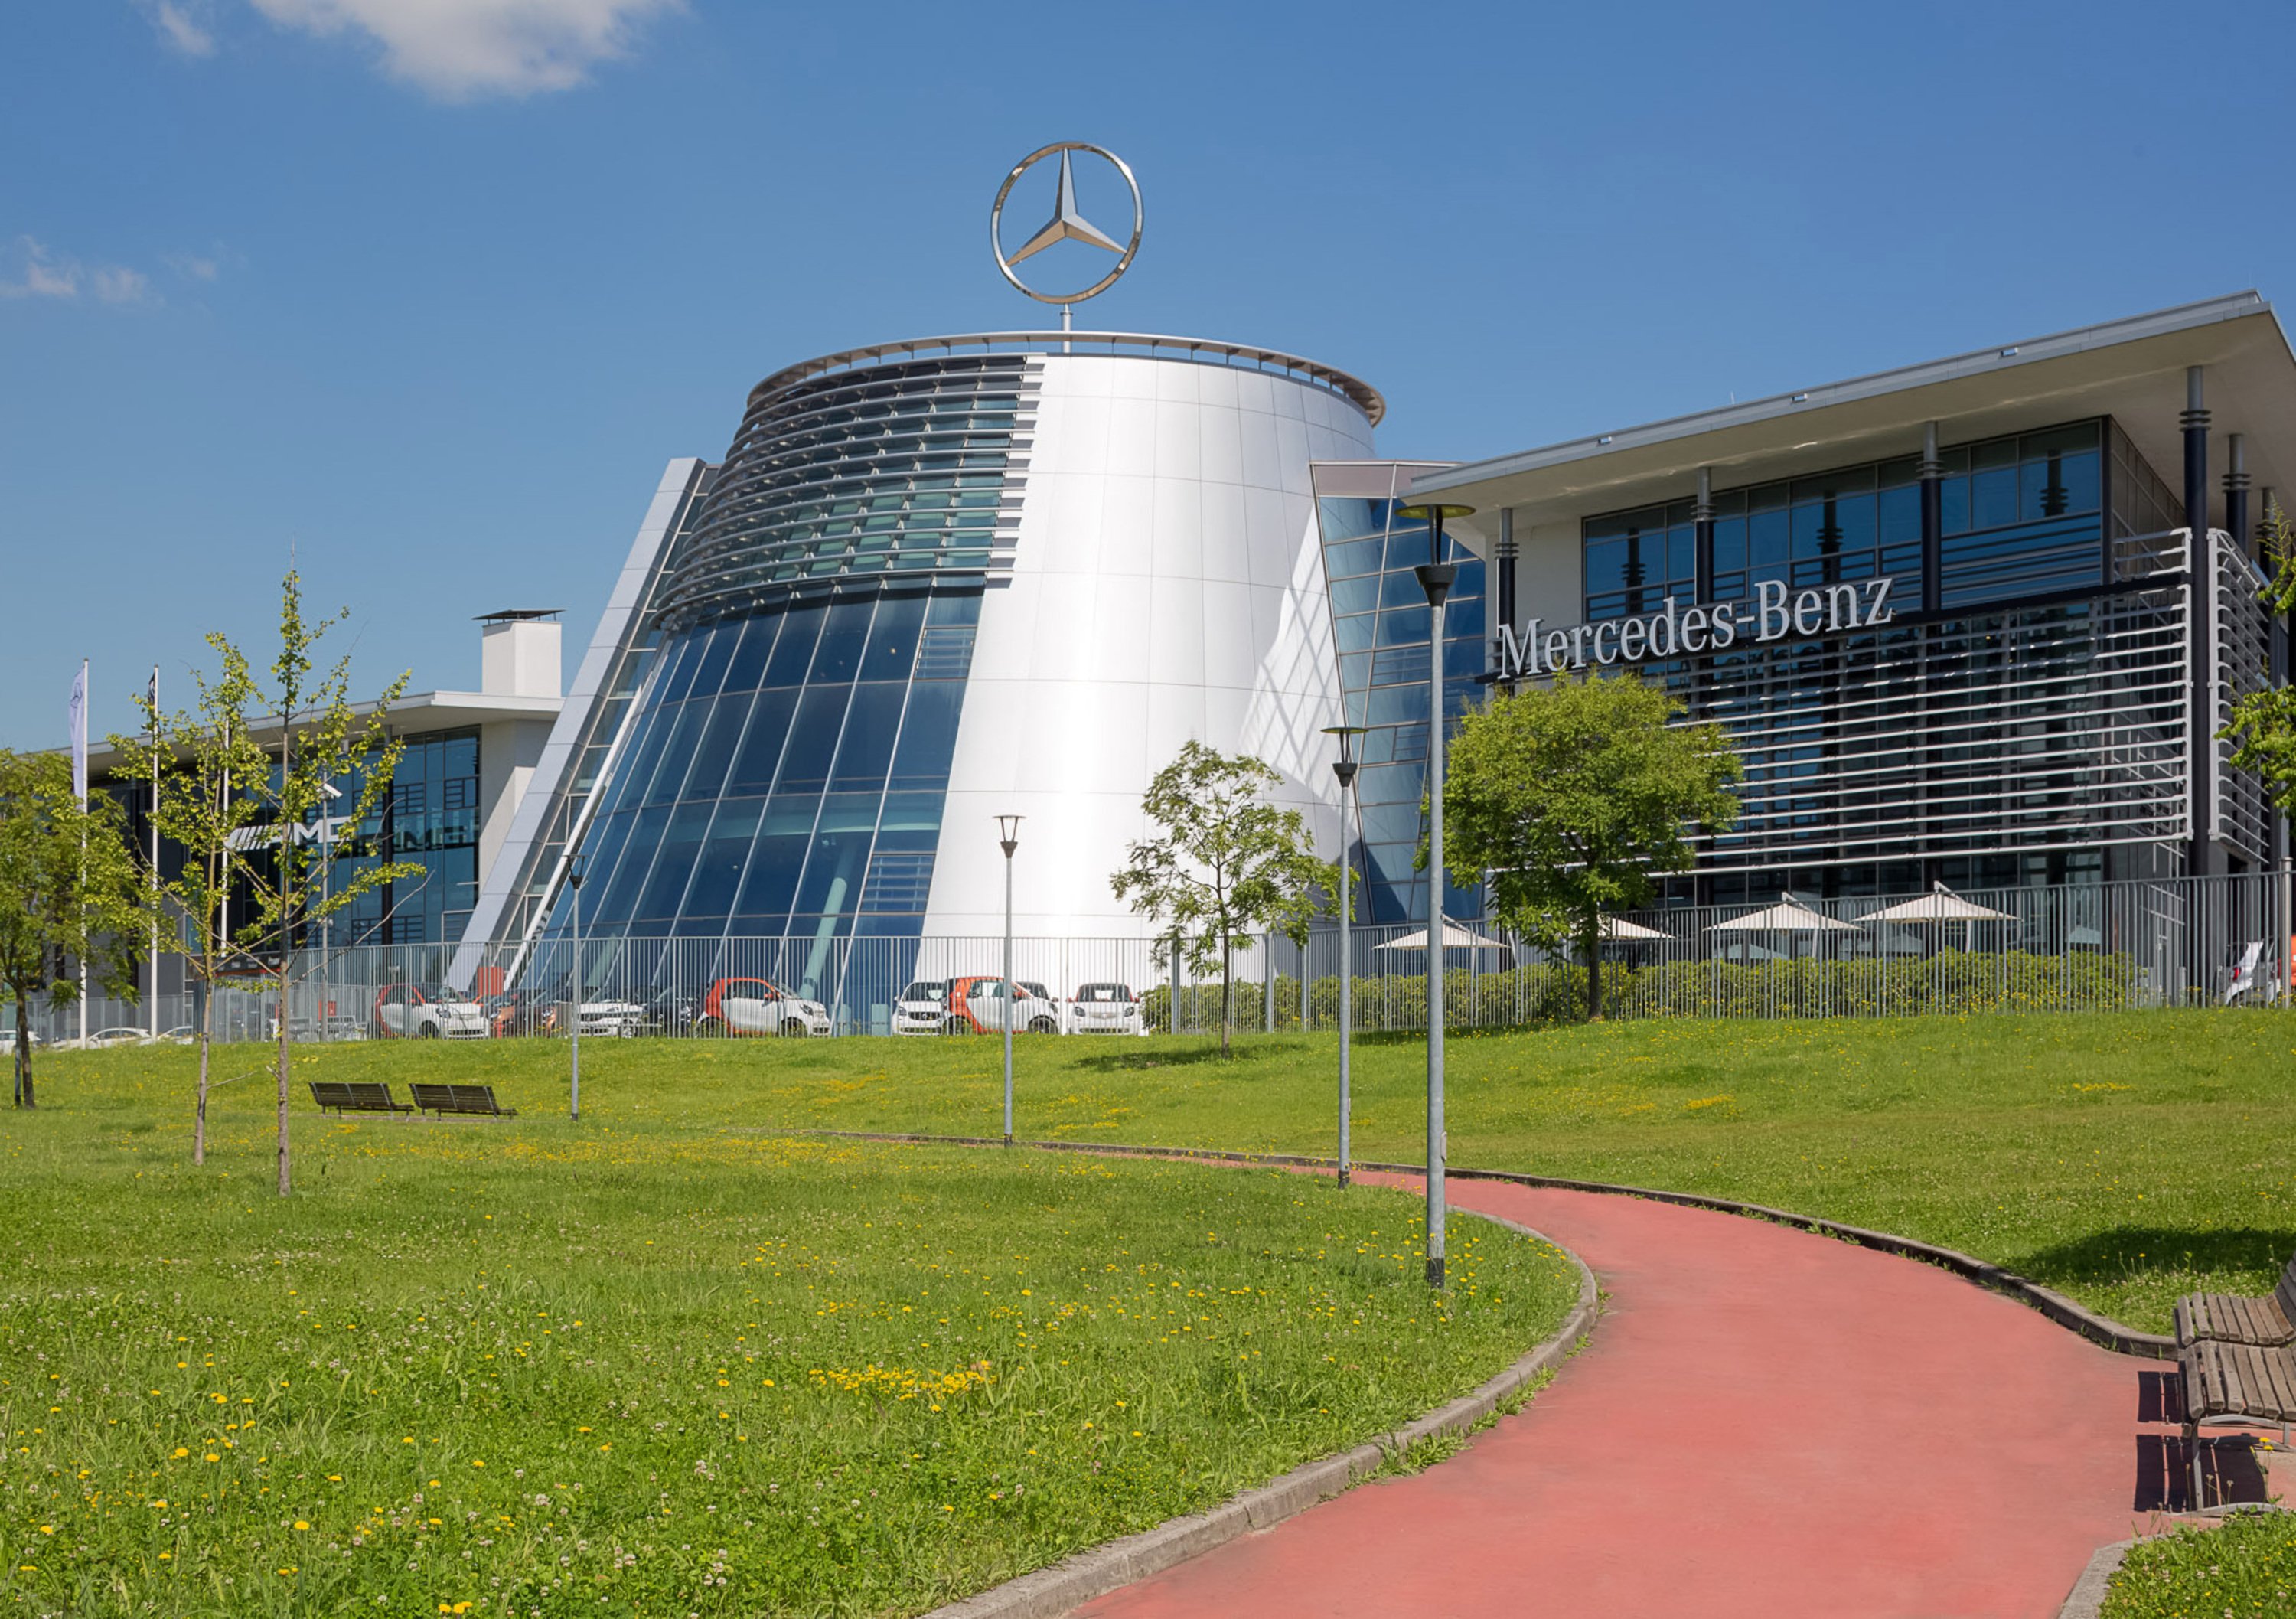 Merbag, a Milano la nuova concessionaria di Mercedes-Benz